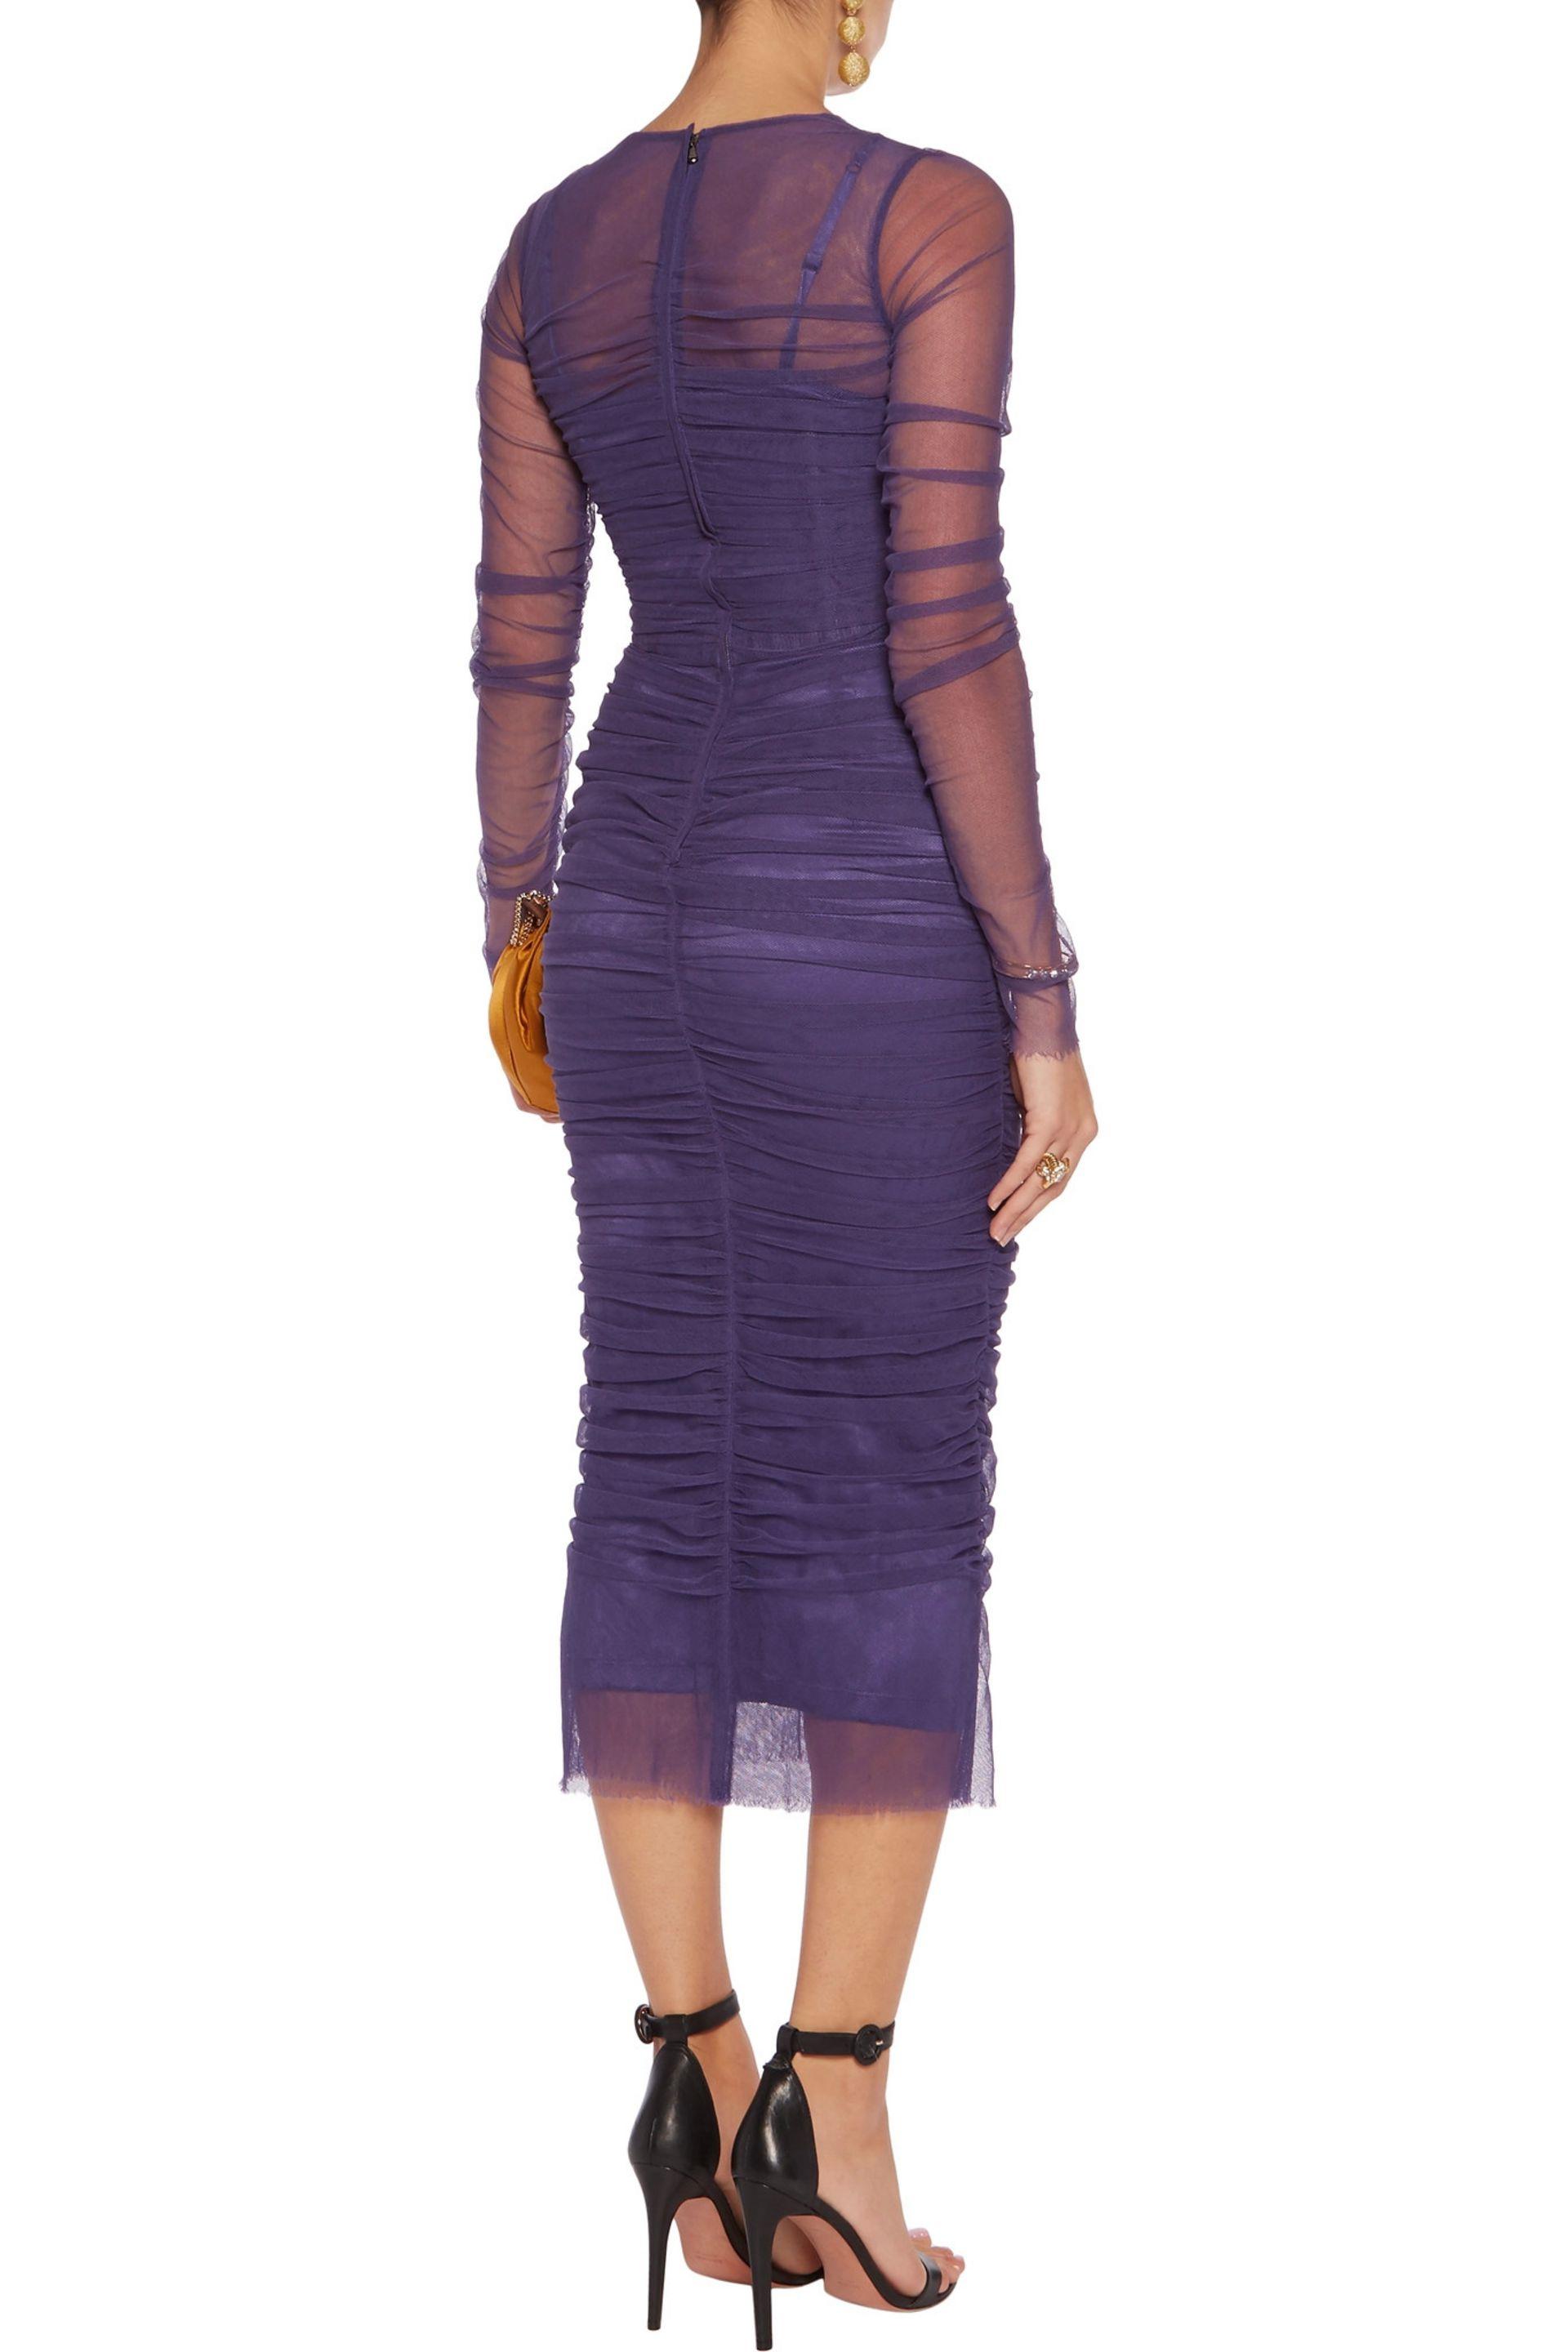 Dolce & Gabbana Gathered Appliquéd Tulle Dress Purple - Lyst